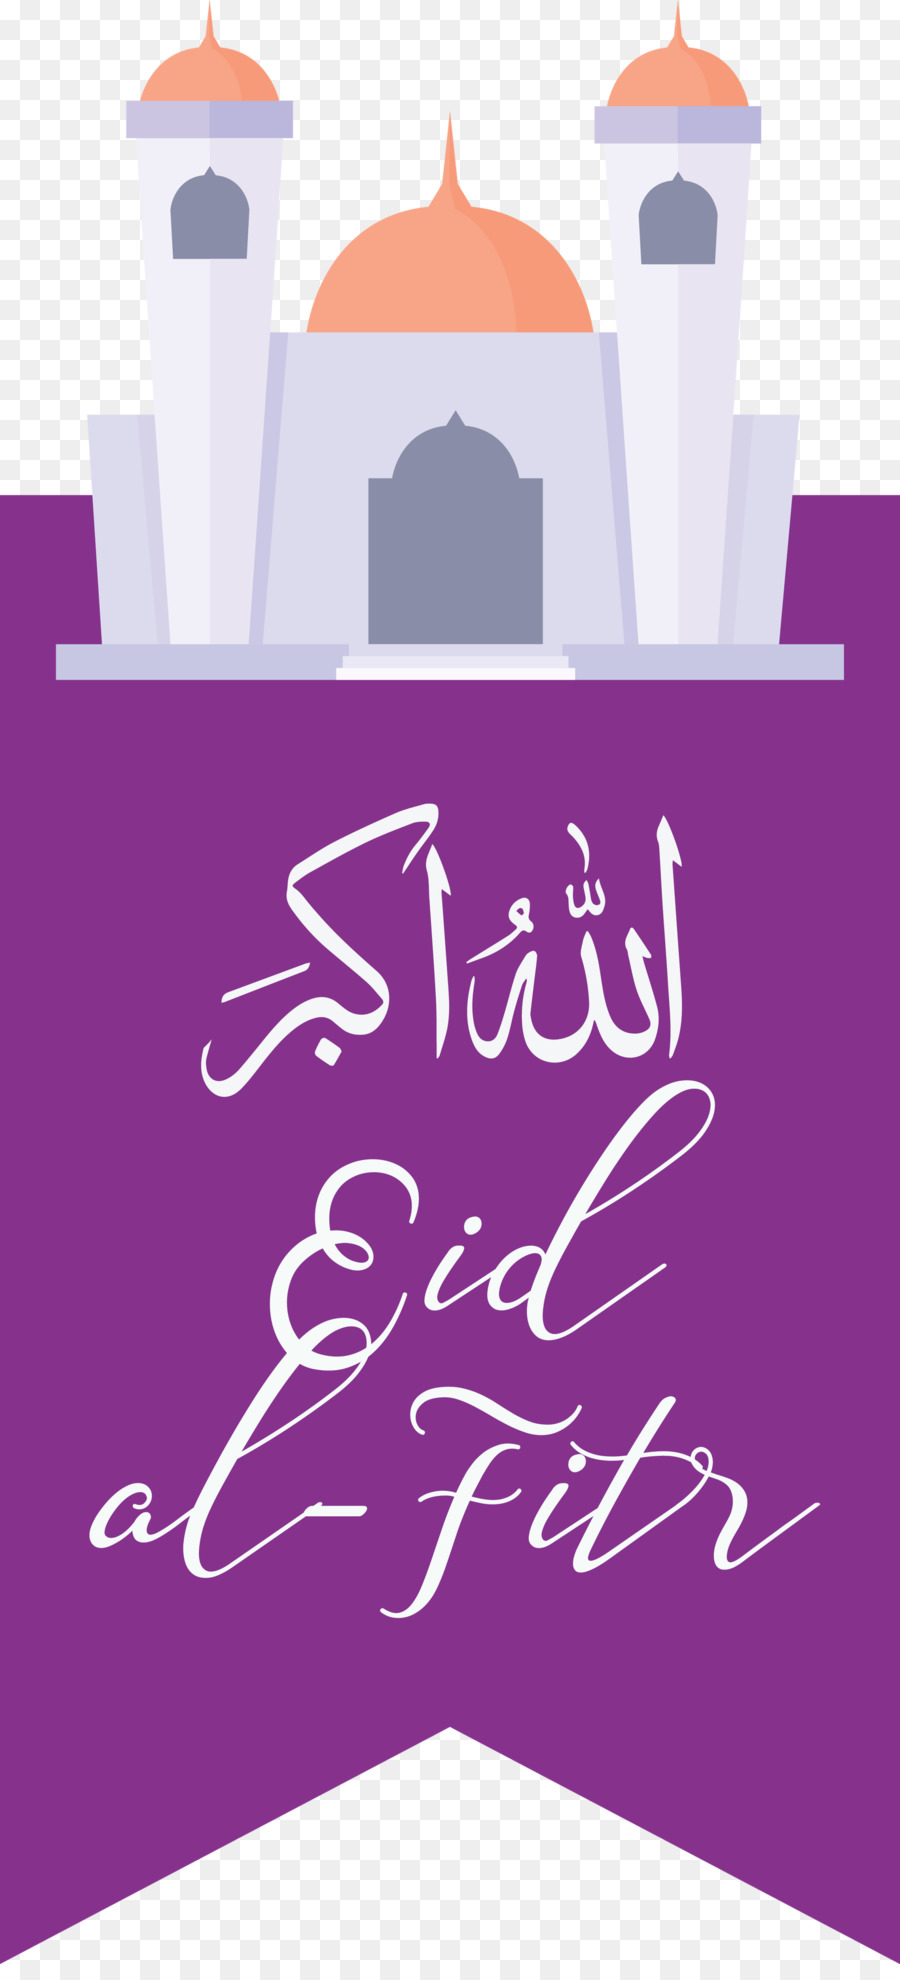 Eid al Fitr, dein Islam ist berührt - 